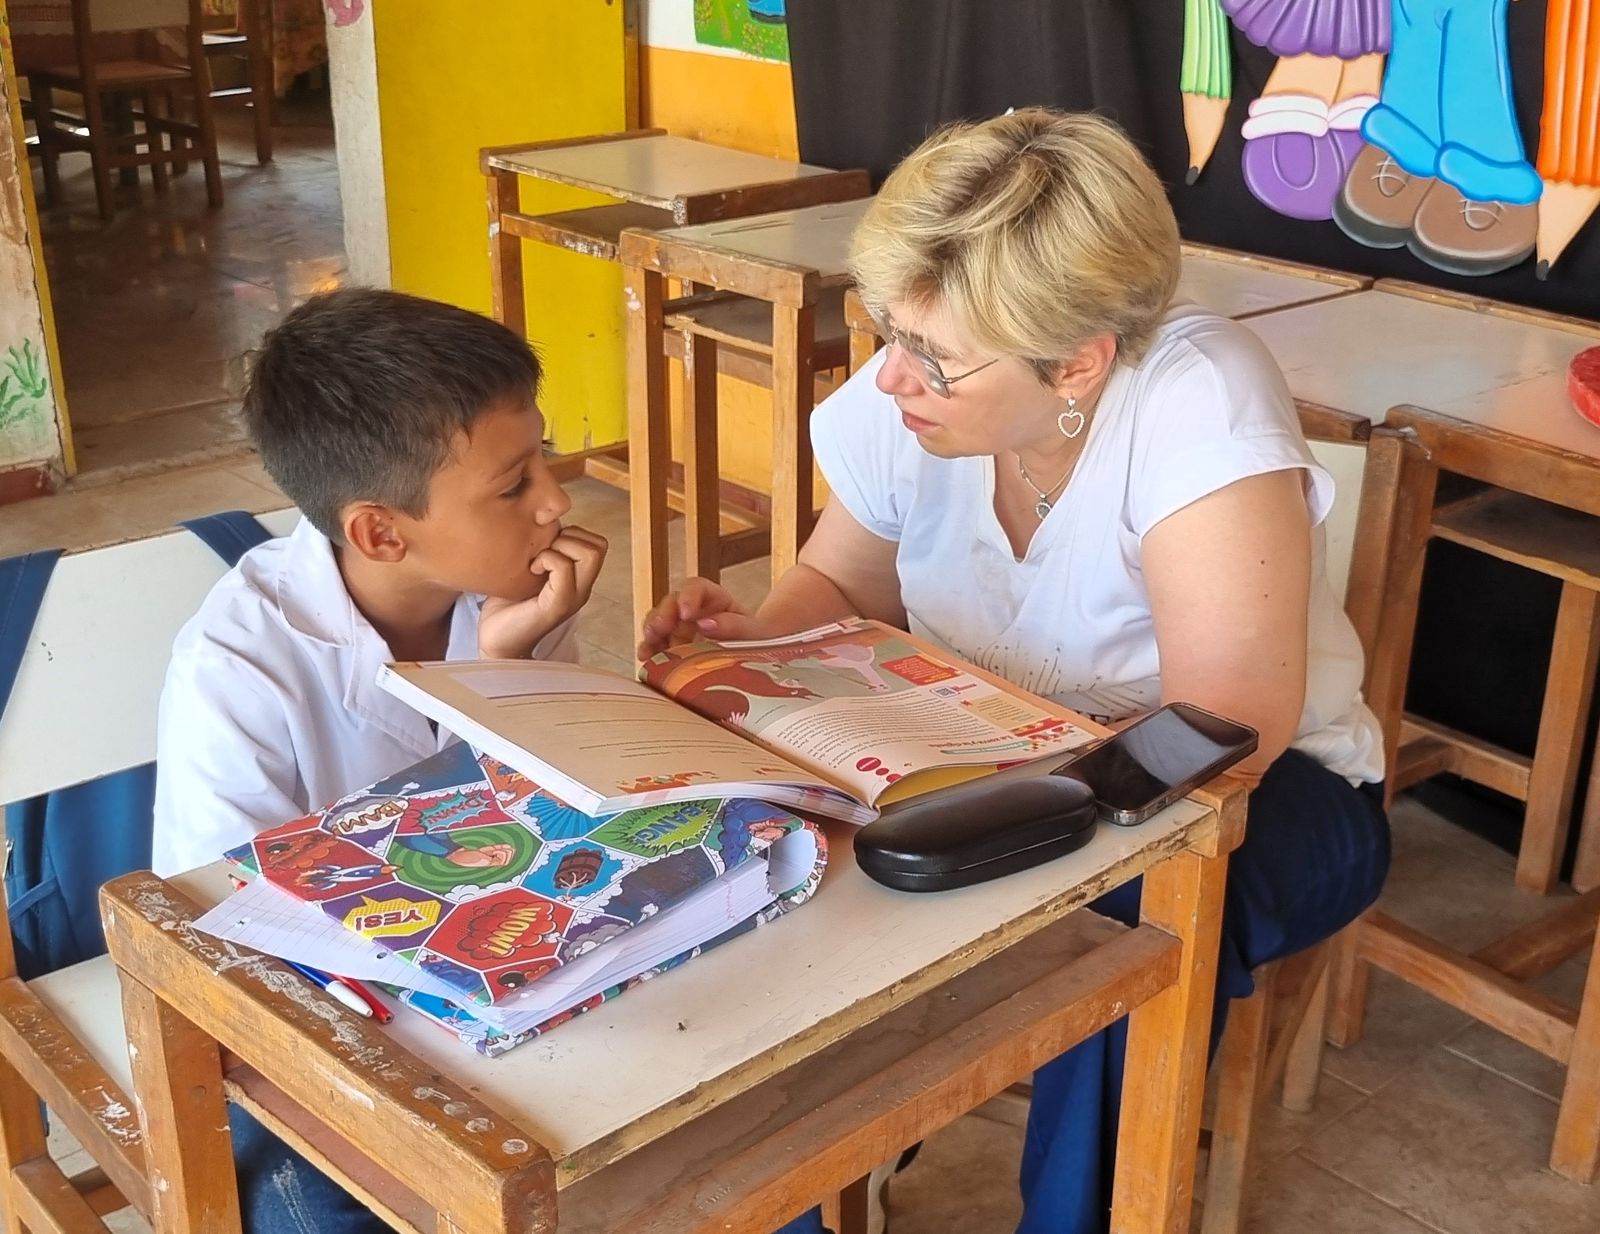 La ministra Naidenoff ratificó que la política educativa apunta a la lectura comprensiva